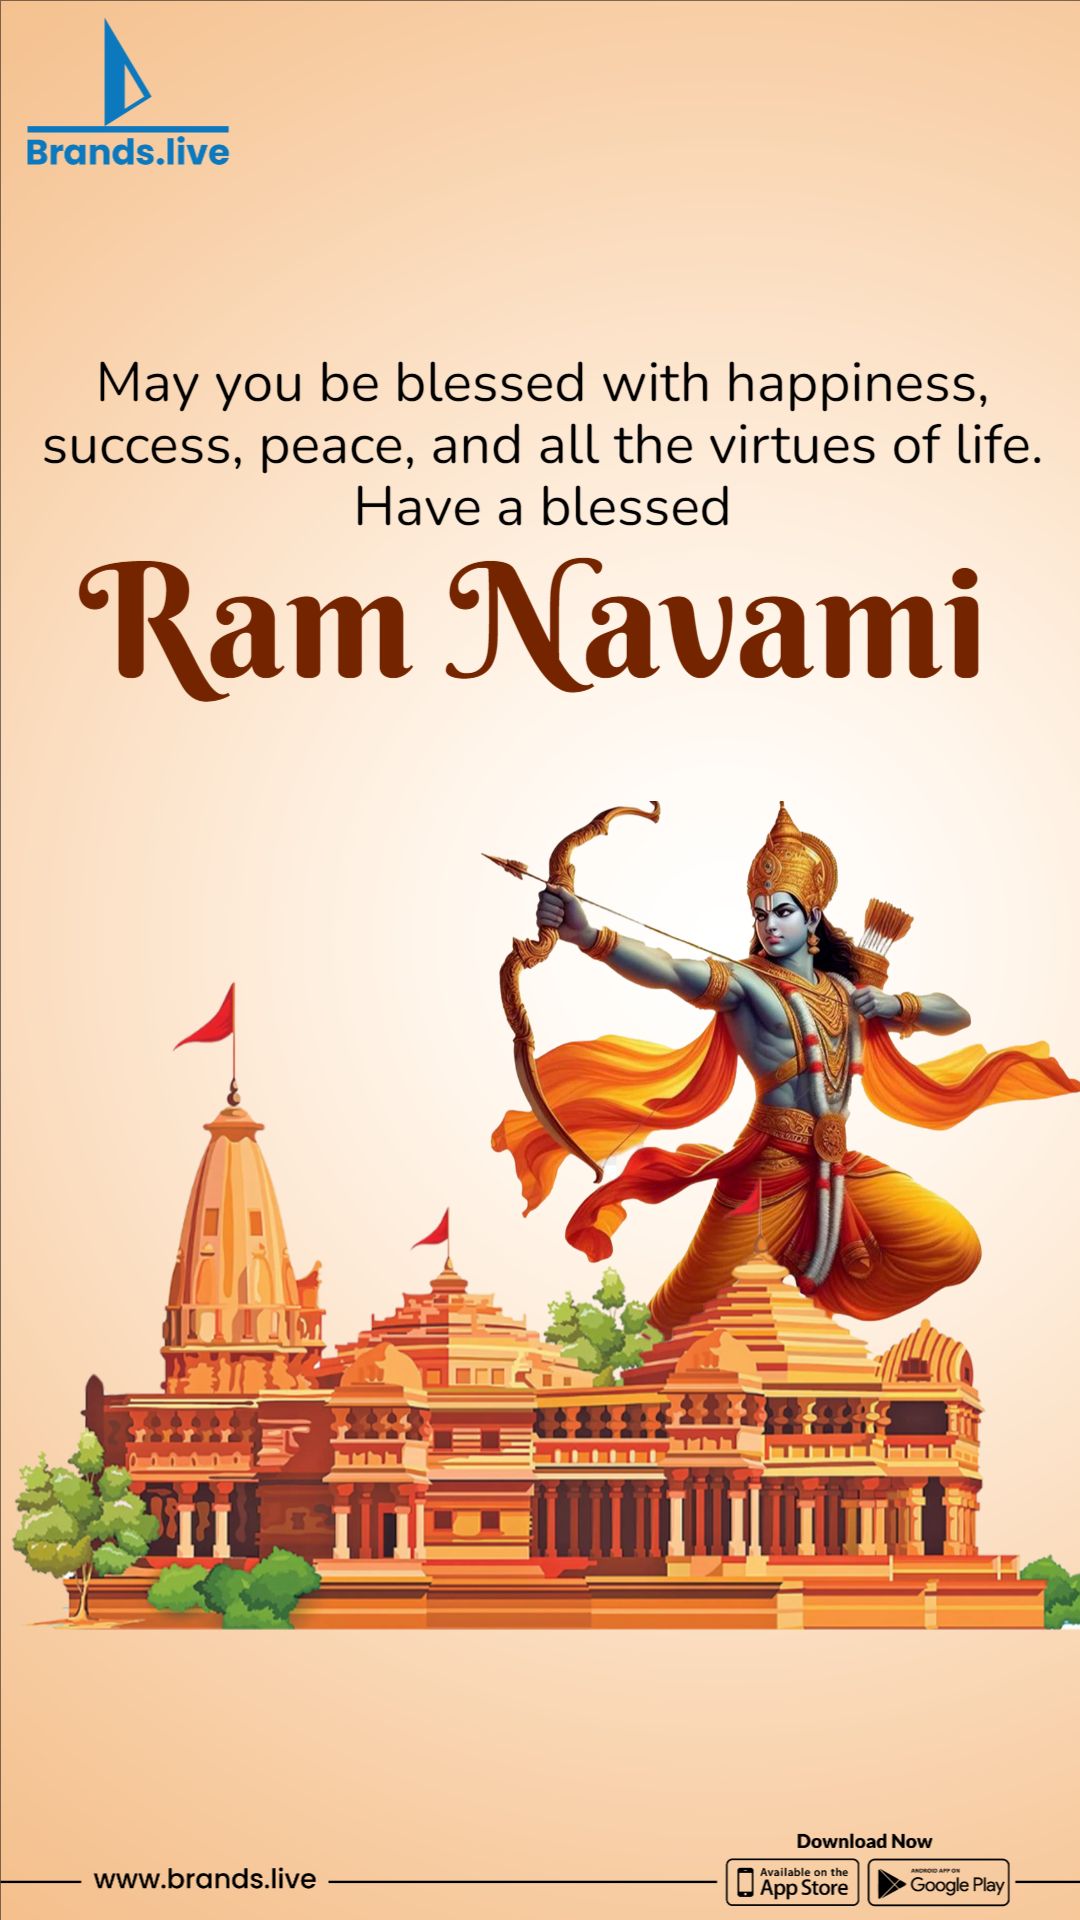 Ram Navami Posters Brands.live